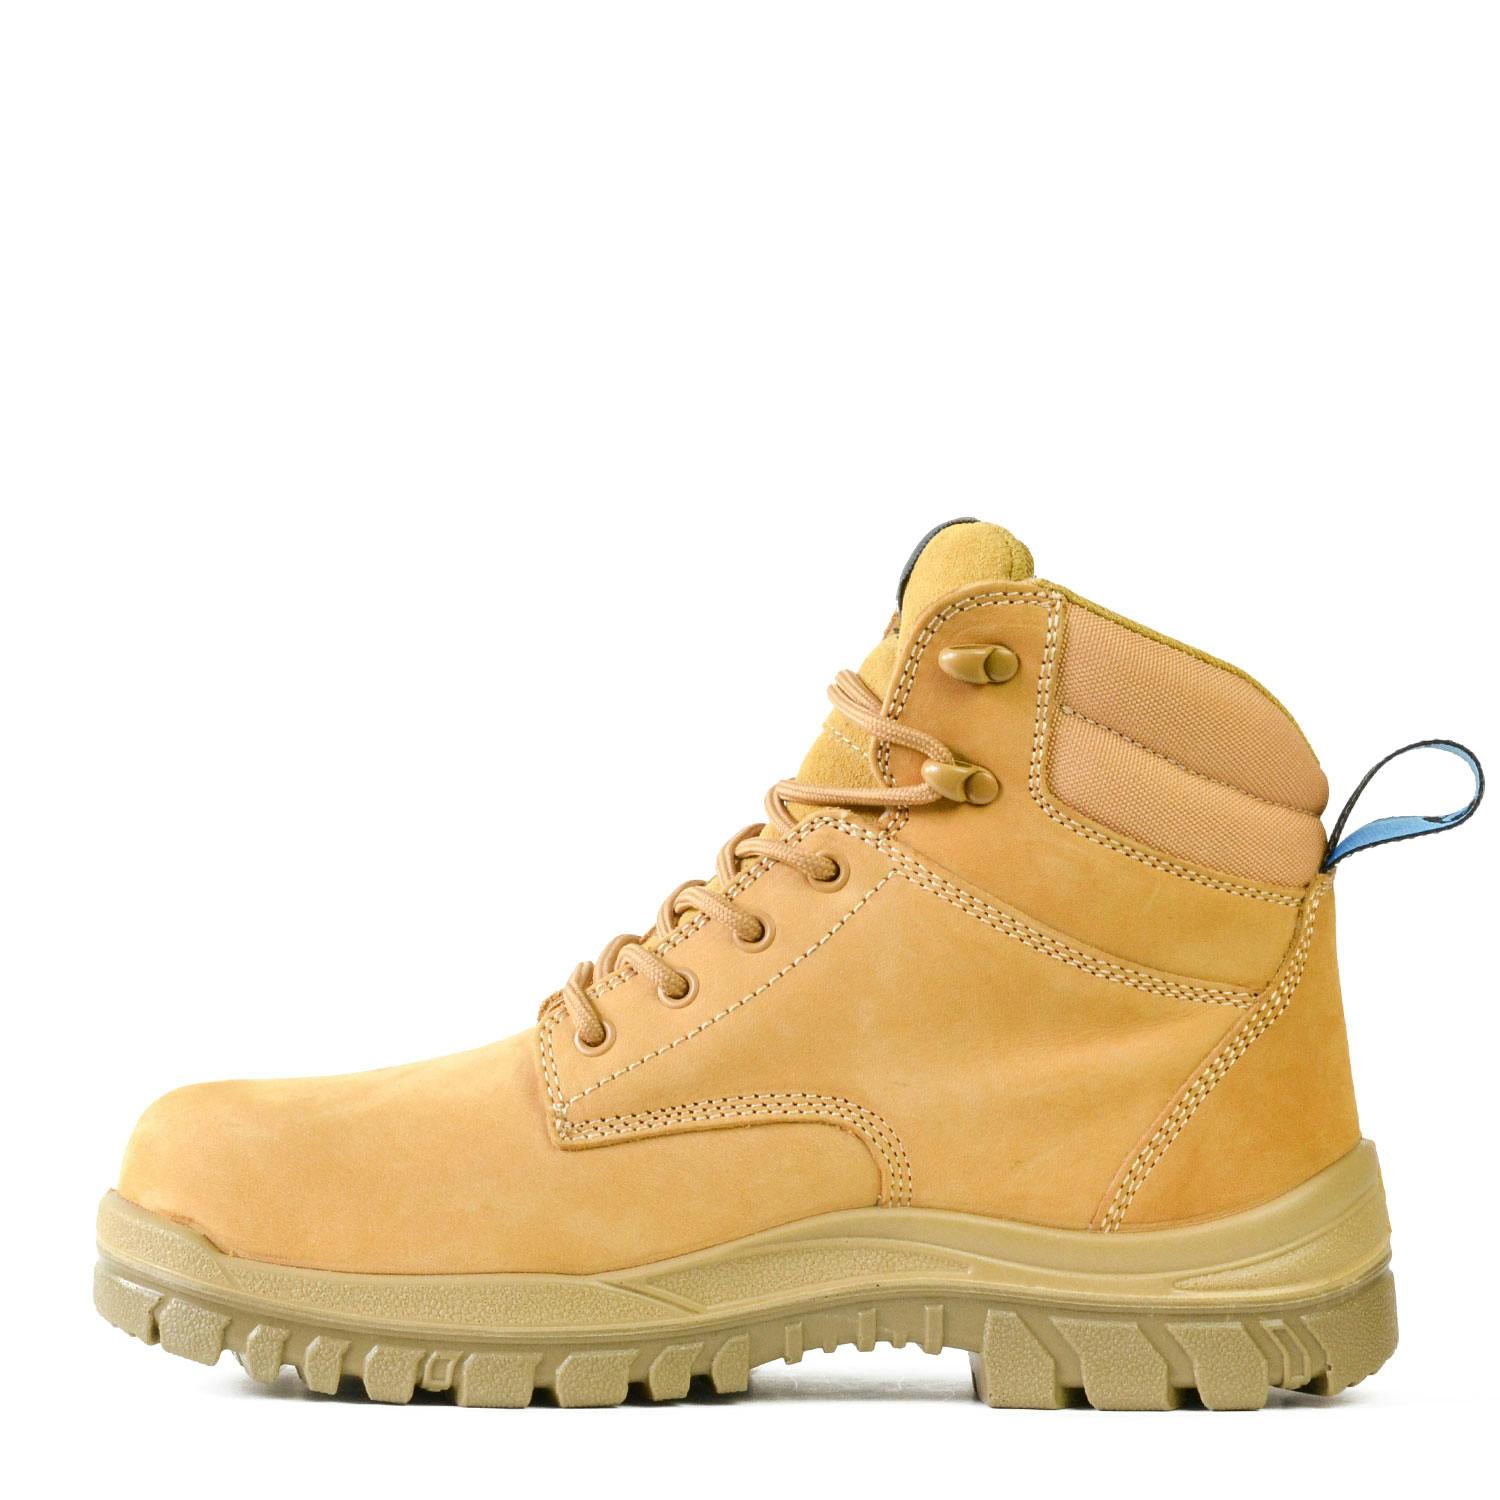 Bata Industrials Titan - Wheat Nubuck Lace Up Safety Boot (Naturals)_3